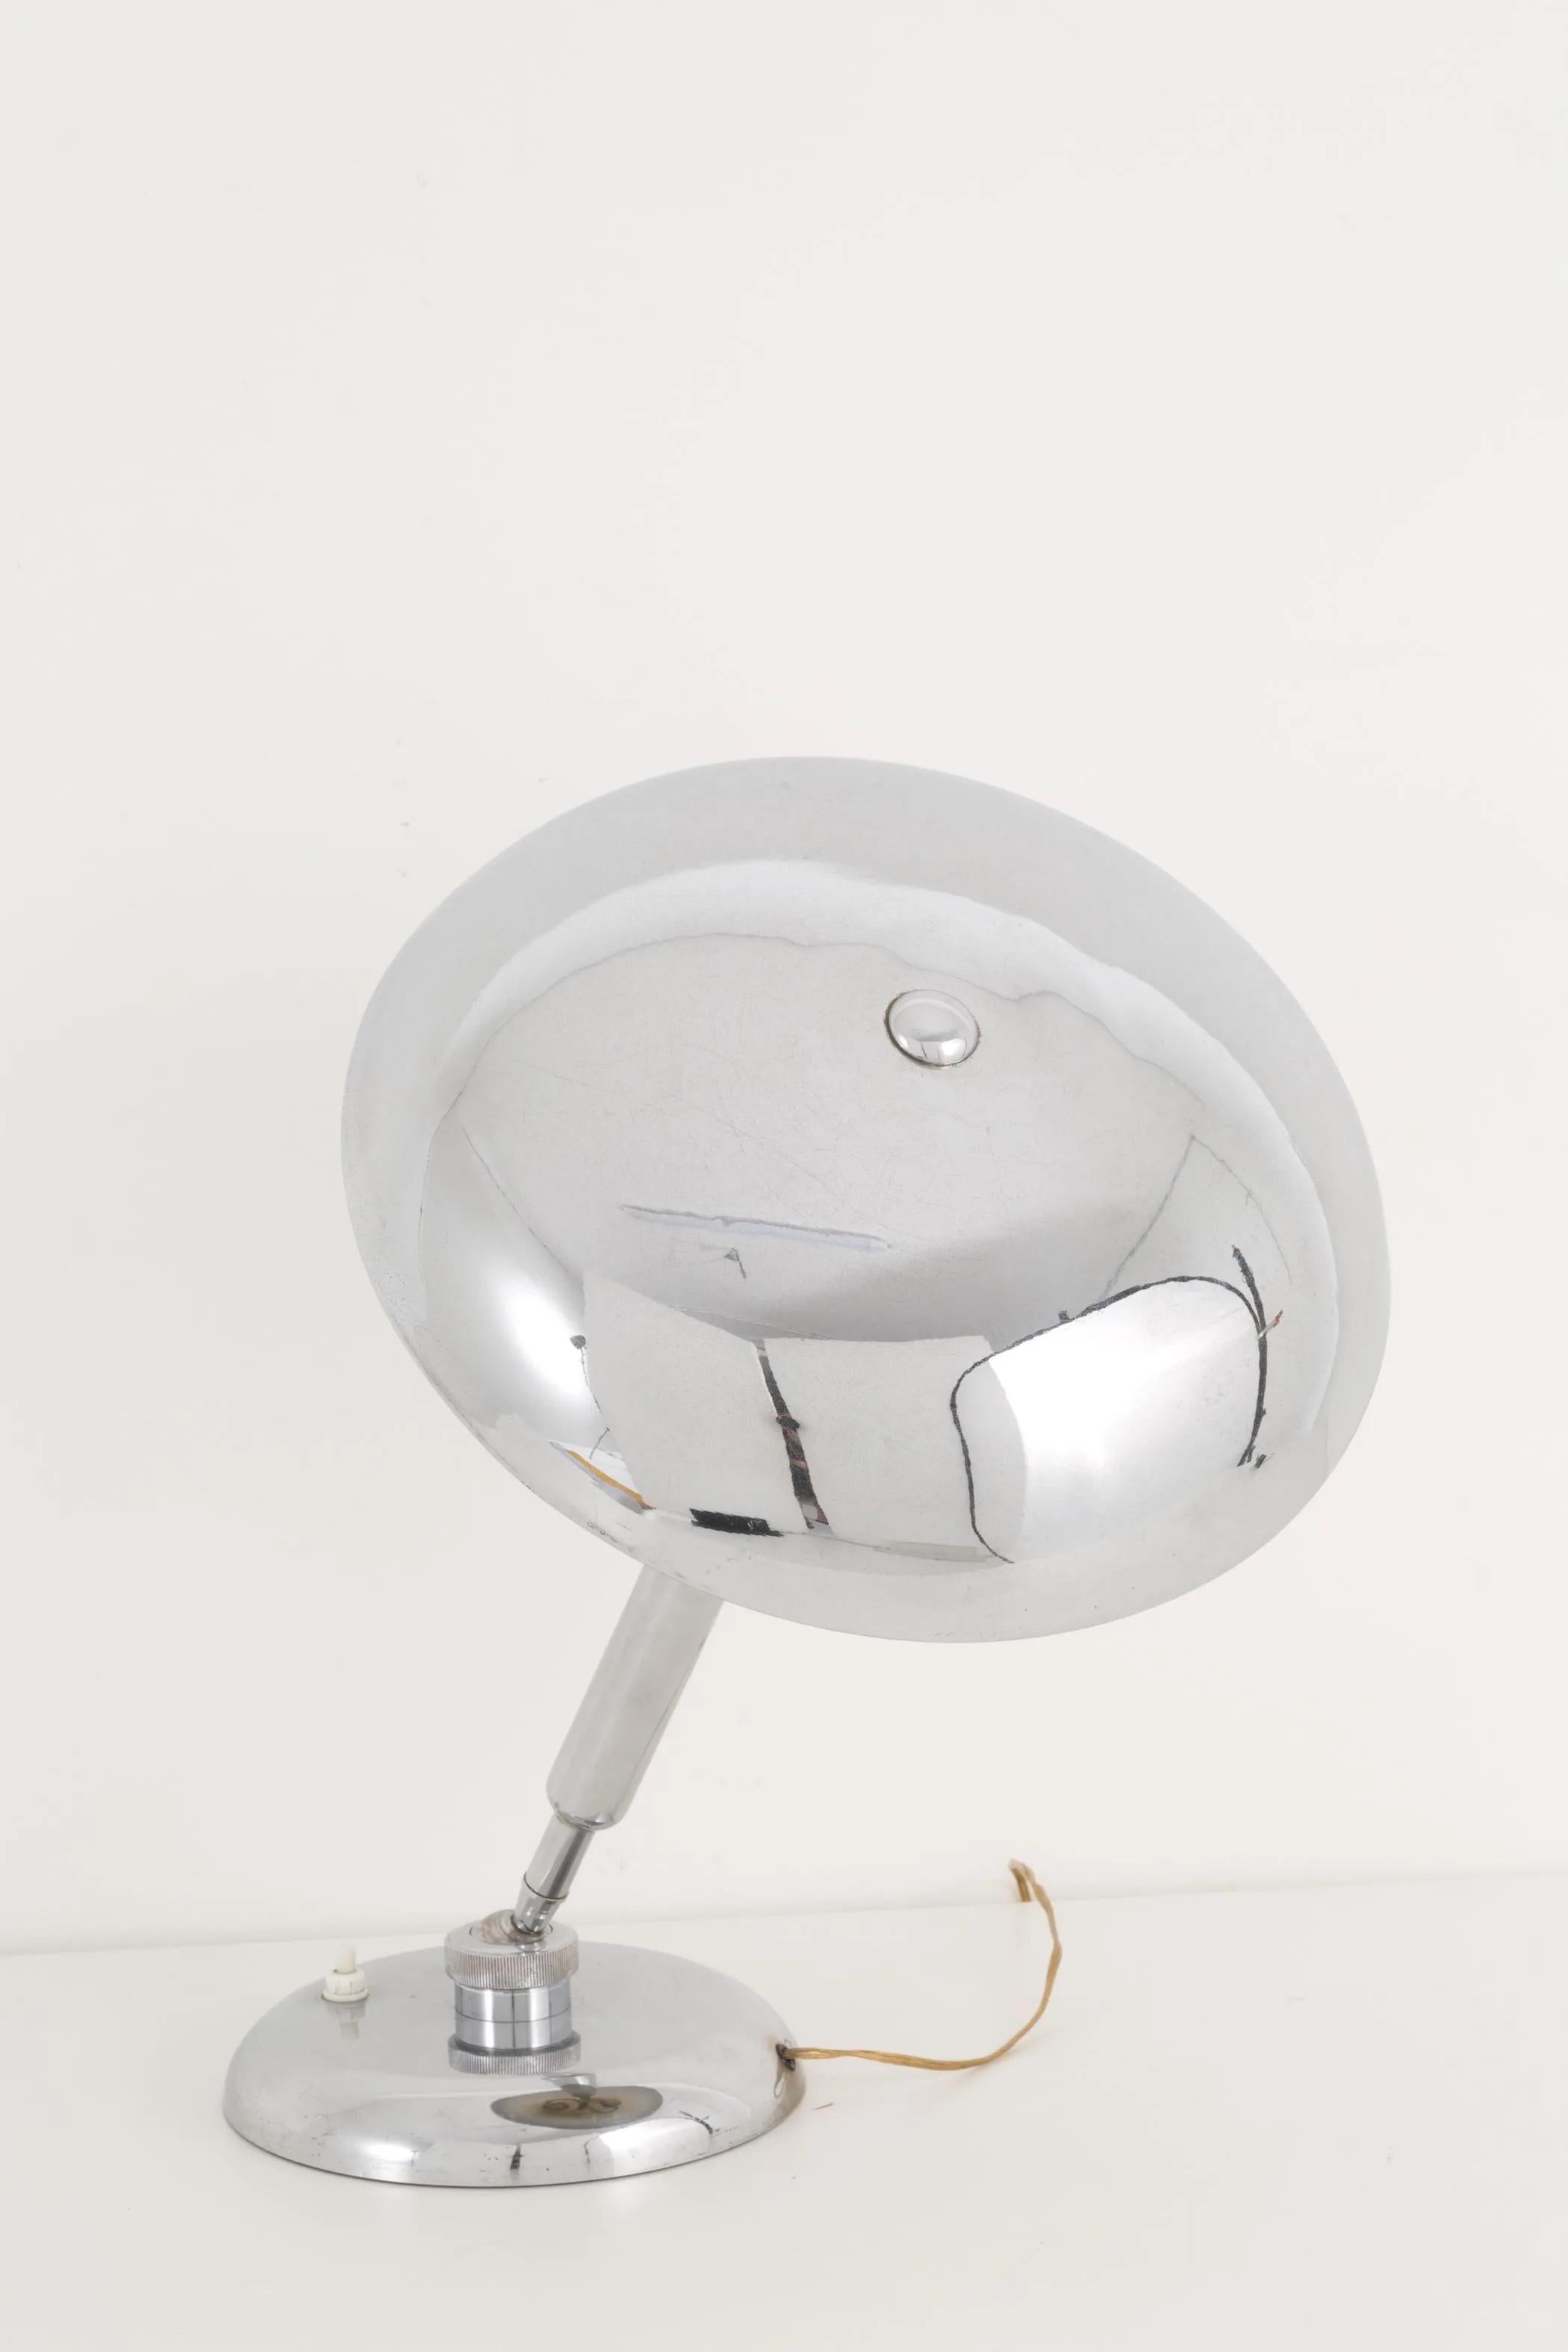 kirby ufo lamp